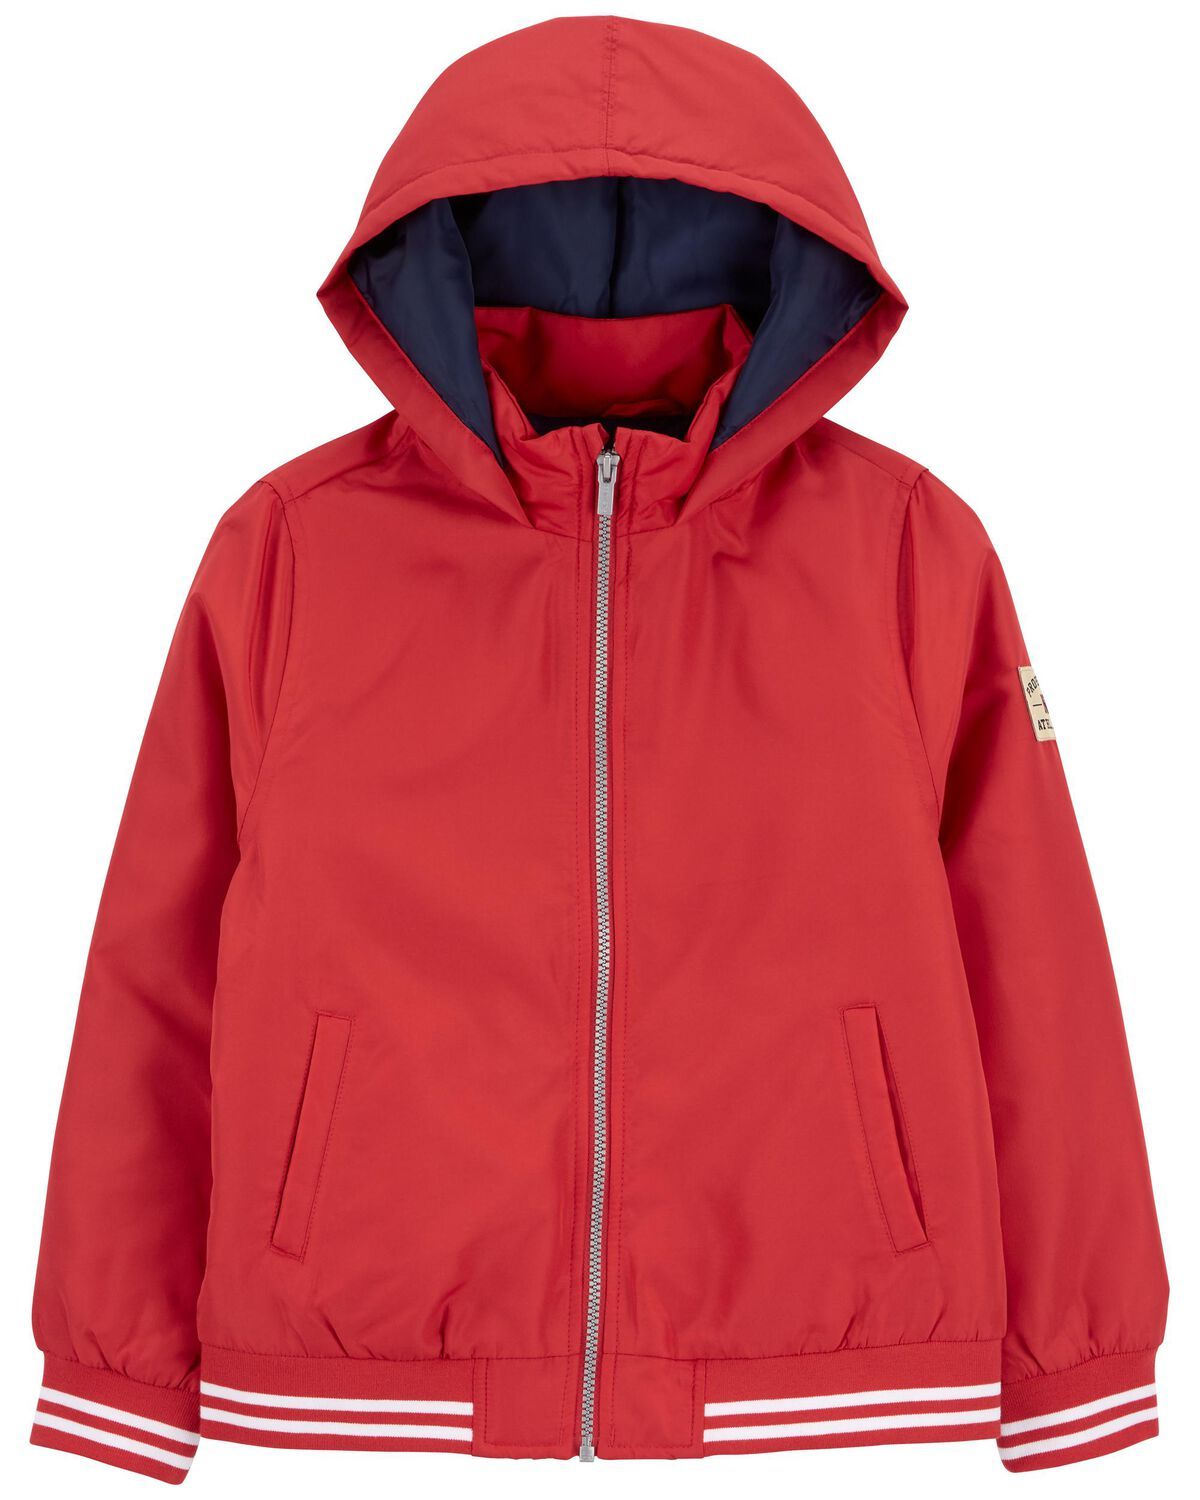 Red Kid Fleece-Lined Mid-Weight Jacket | carters.com | Carter's